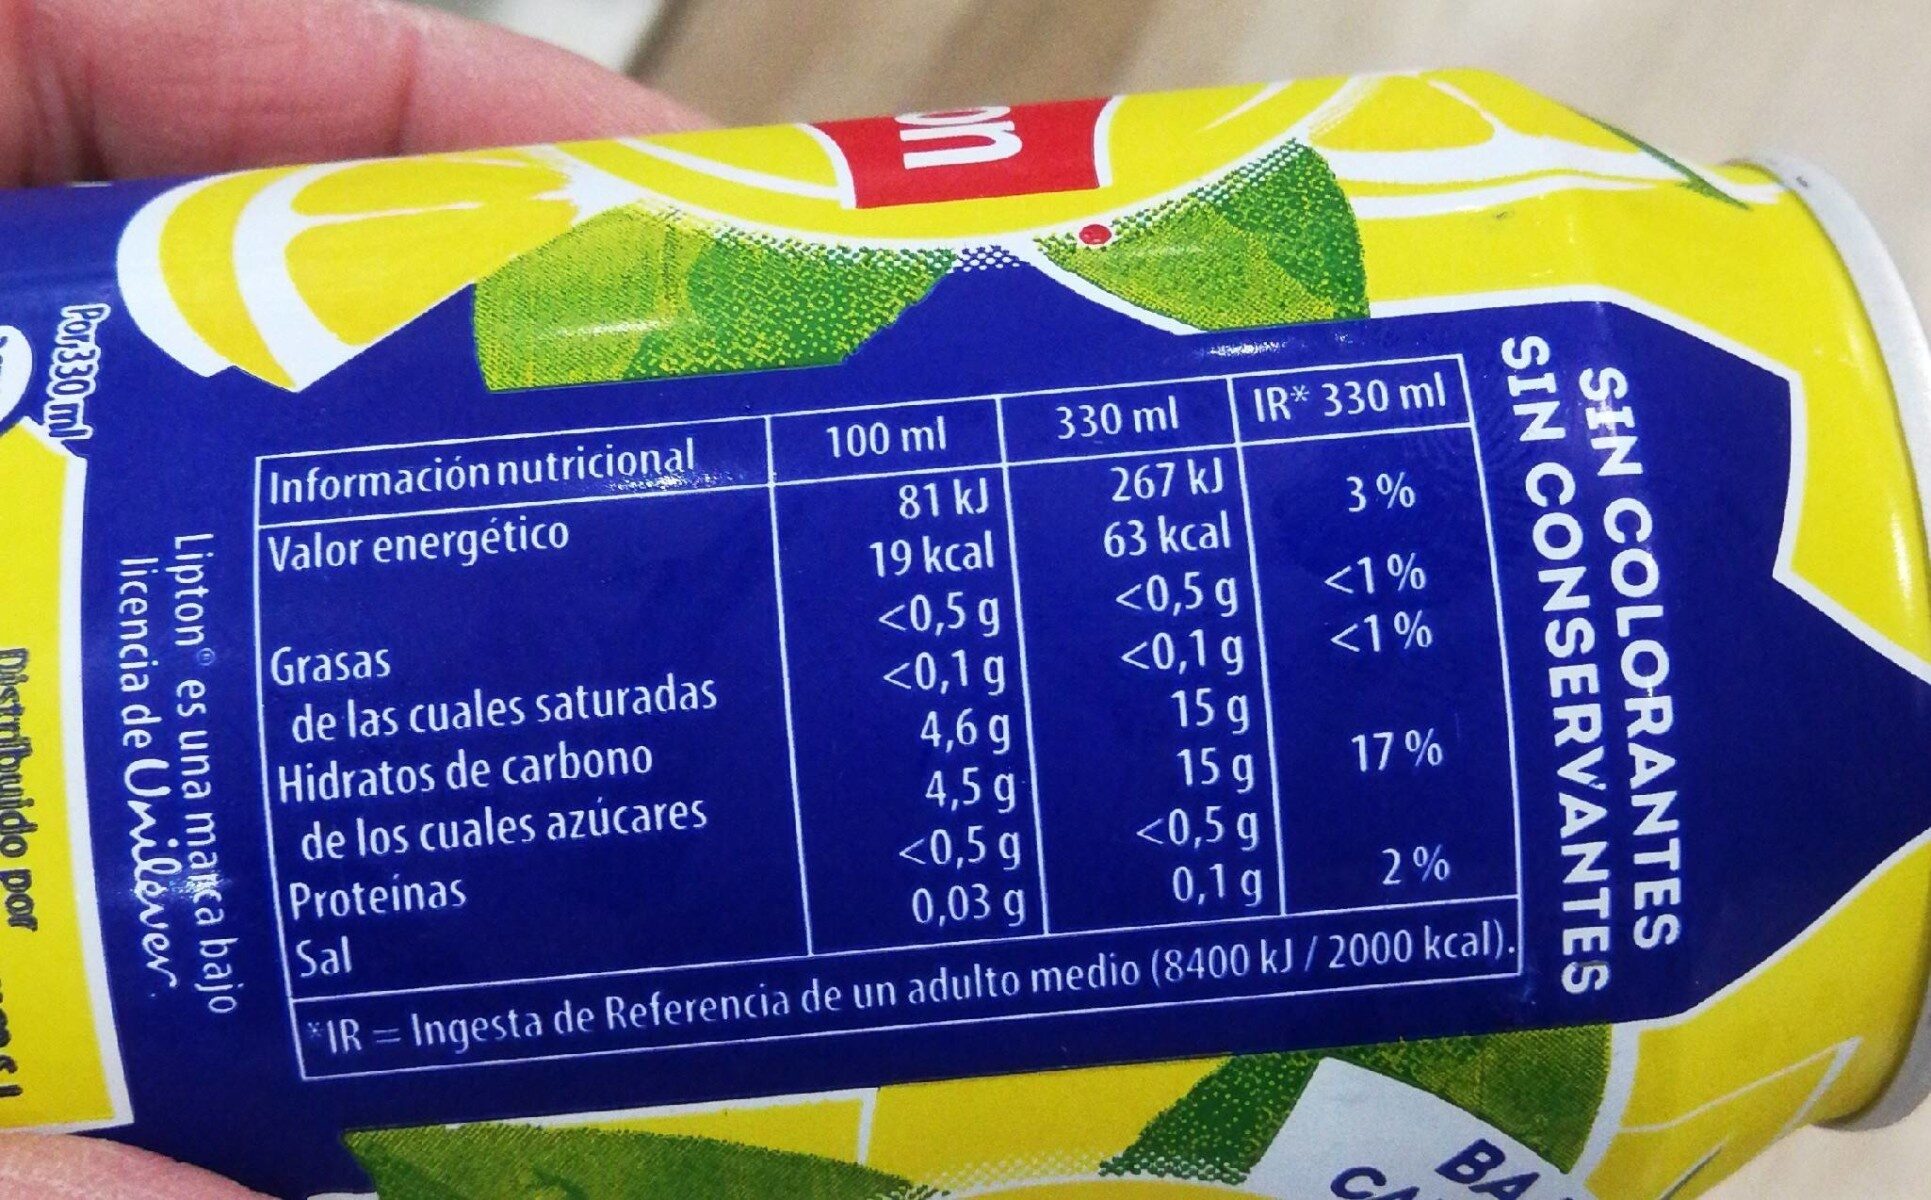 Lipton Ice Tea -lemon - Nuevo Sabor Limón - Informació nutricional - fr